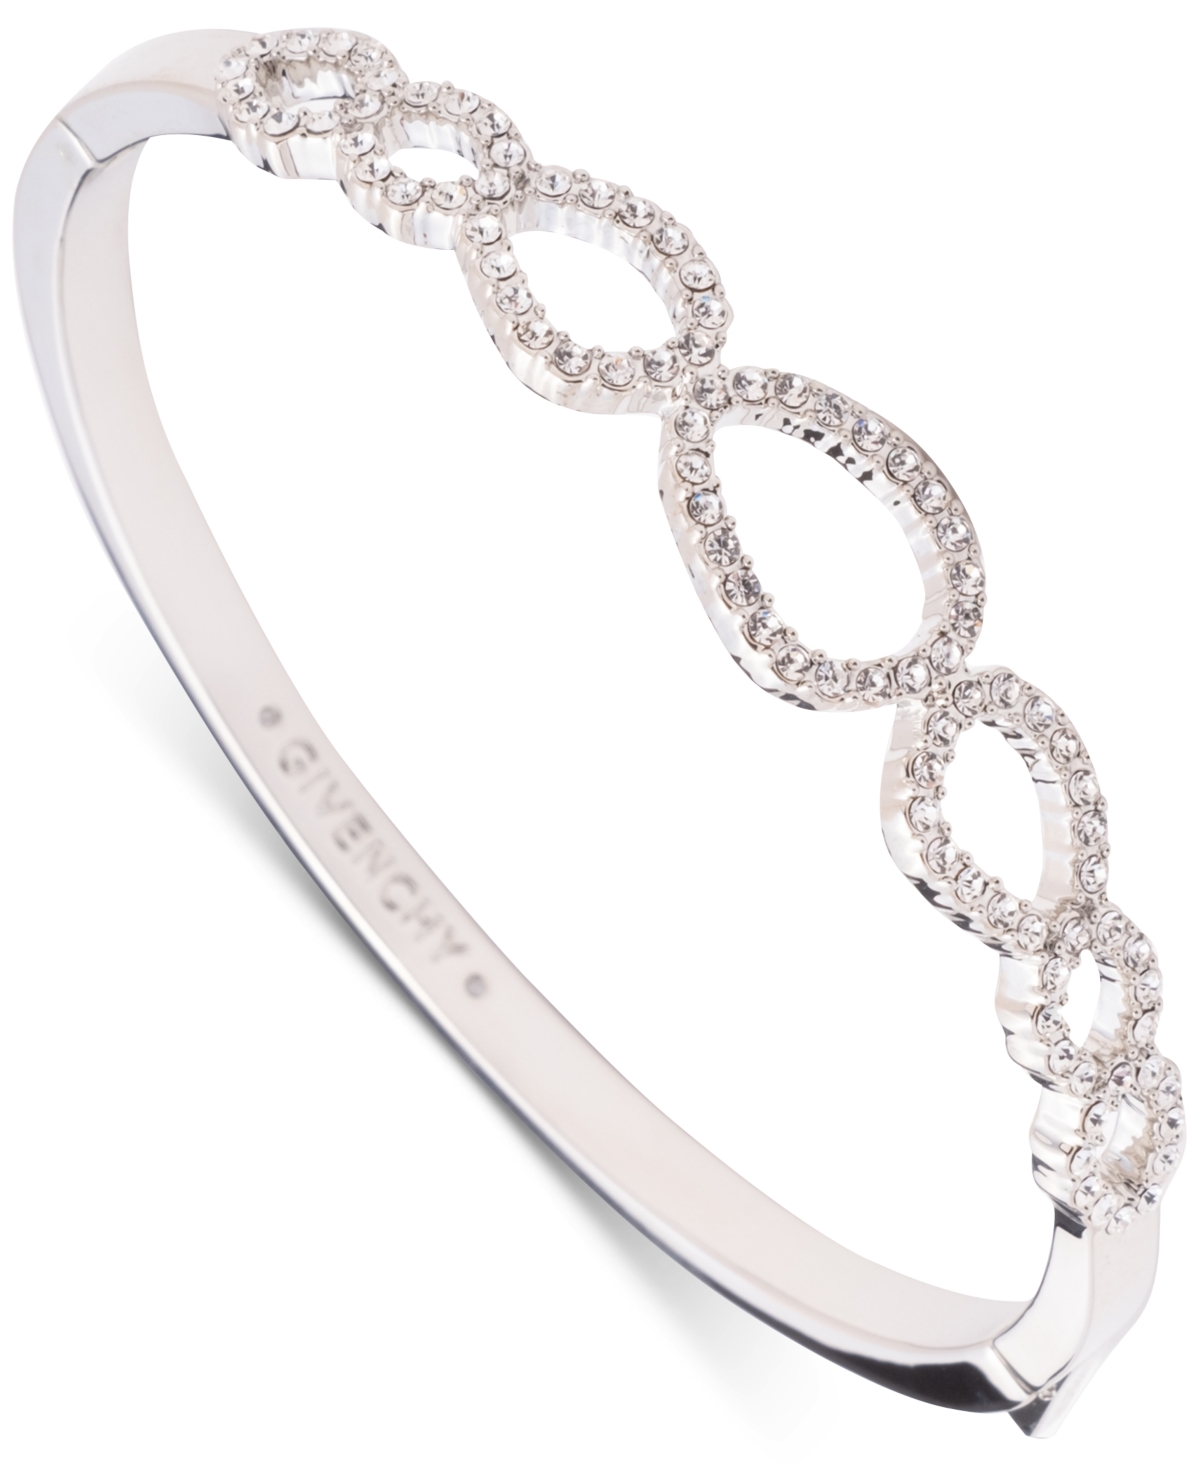 Silver-Tone Crystal Open Link Bangle Bracelet - White